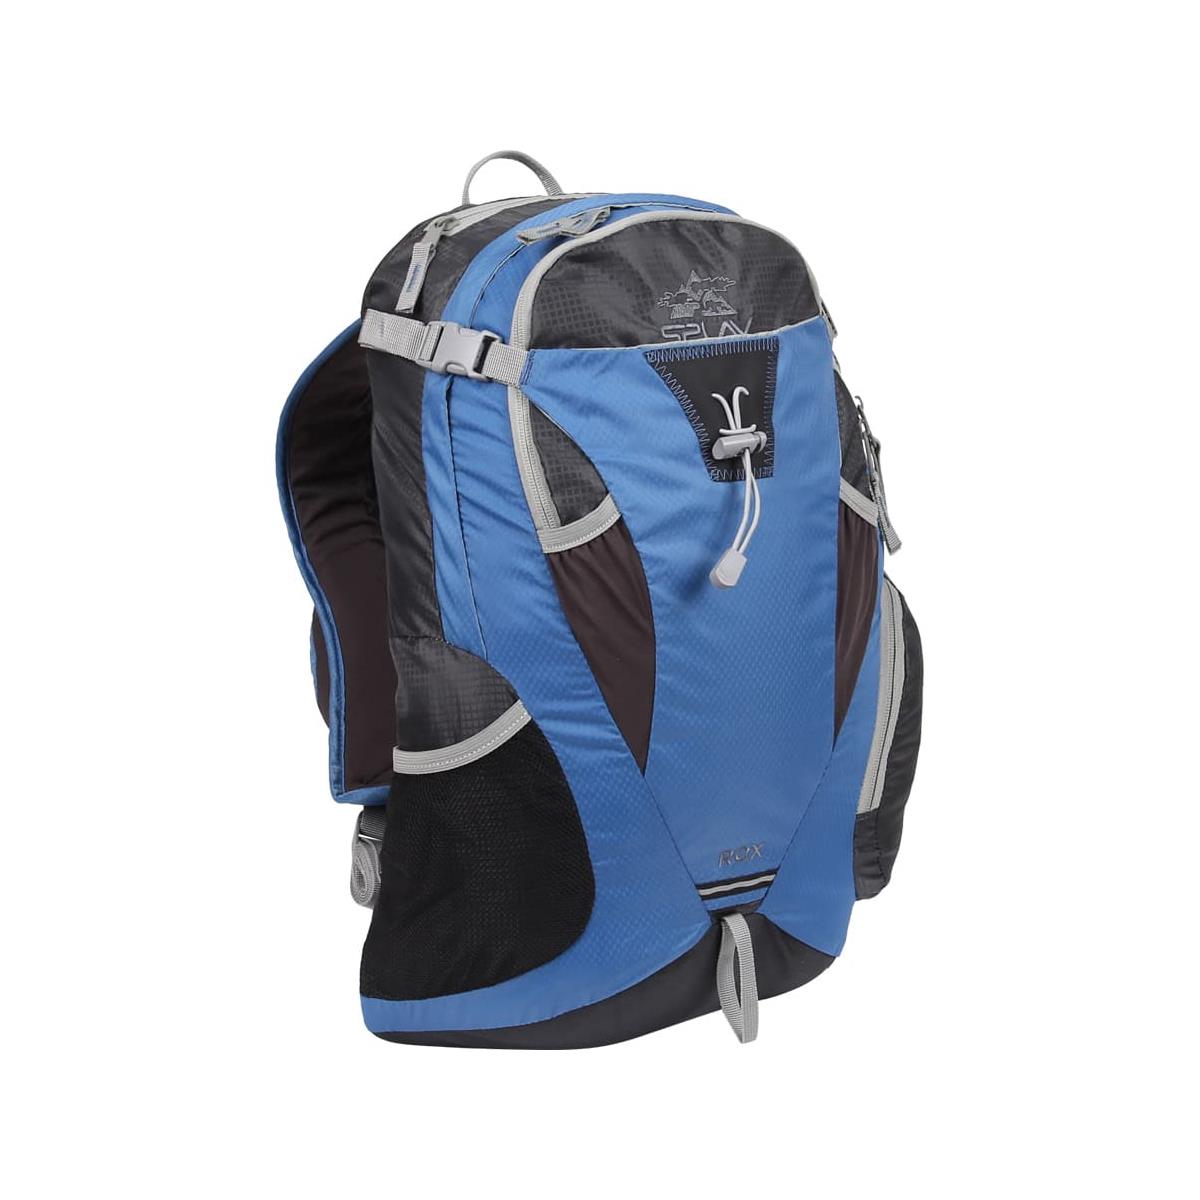 Рюкзак Rox синий СПЛАВ сумка для обуви на молнии наружный карман синий красный